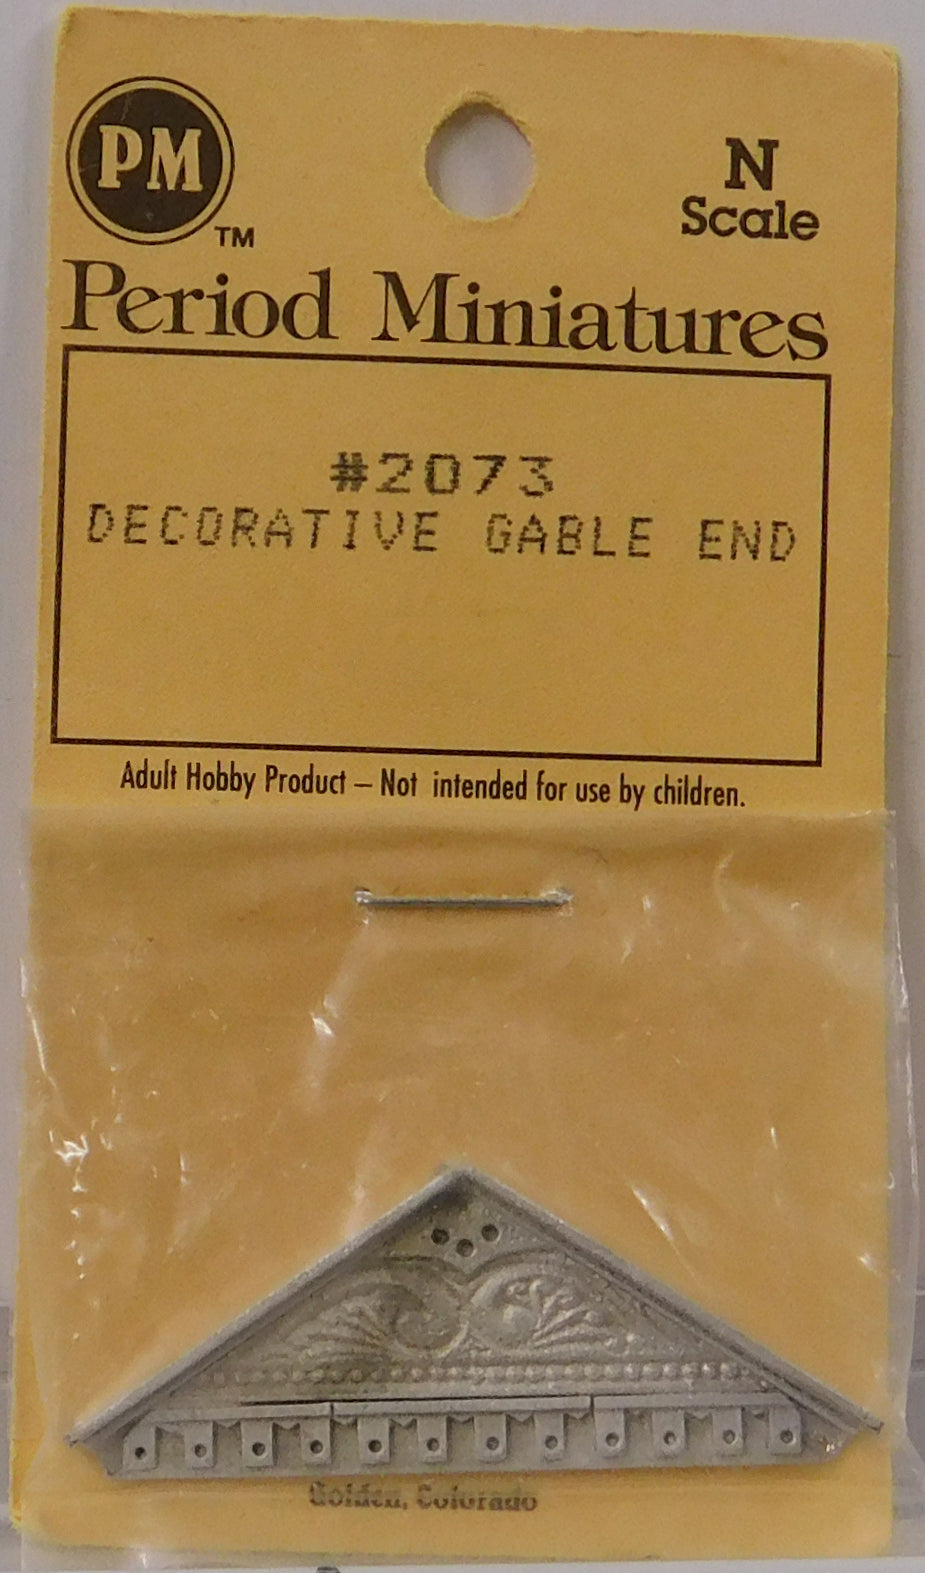 Period Miniatures 2073 N Decorative Gable End